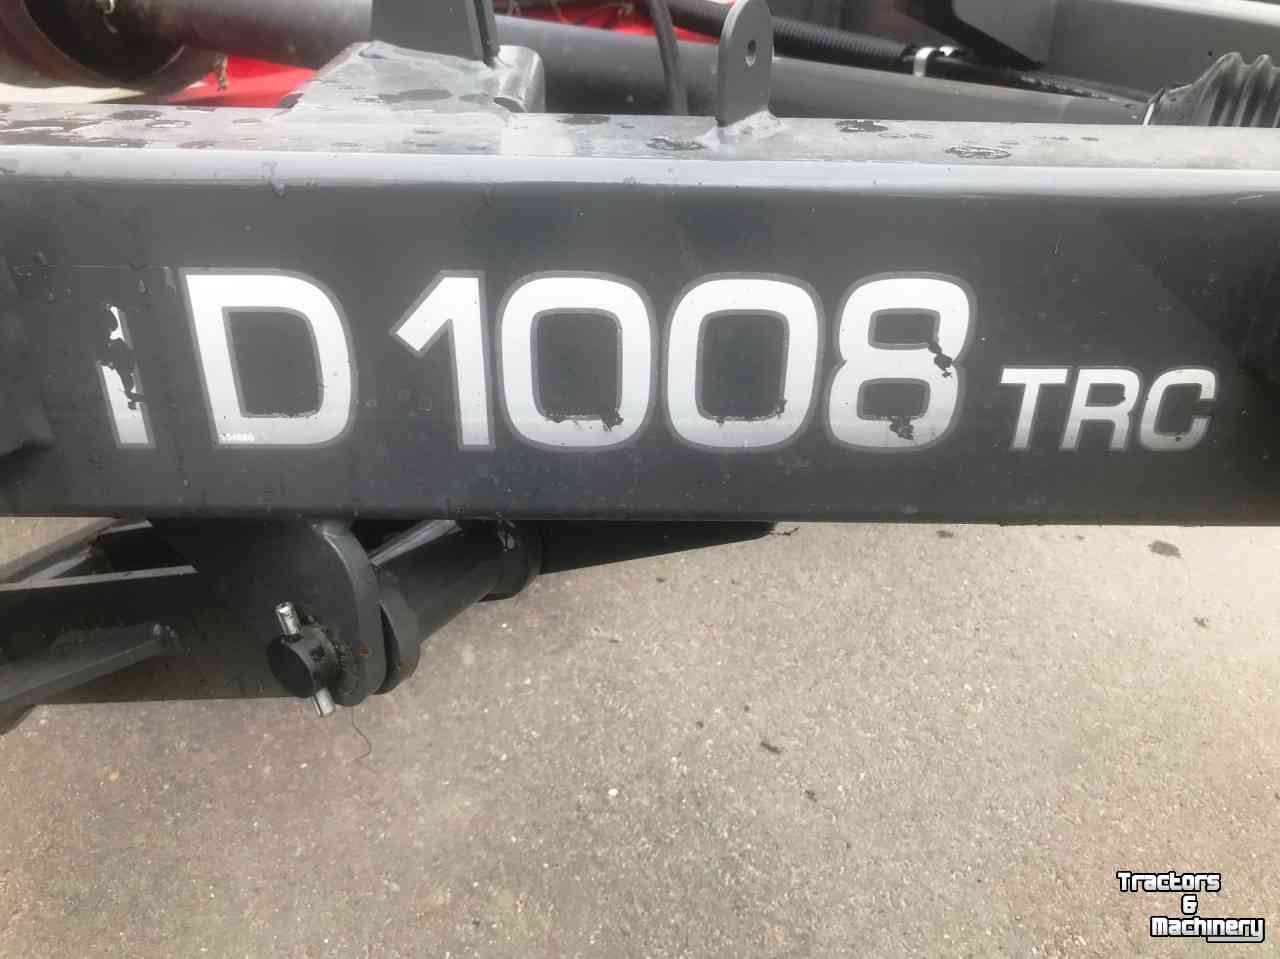 Faneur MF TD 1008 TRC